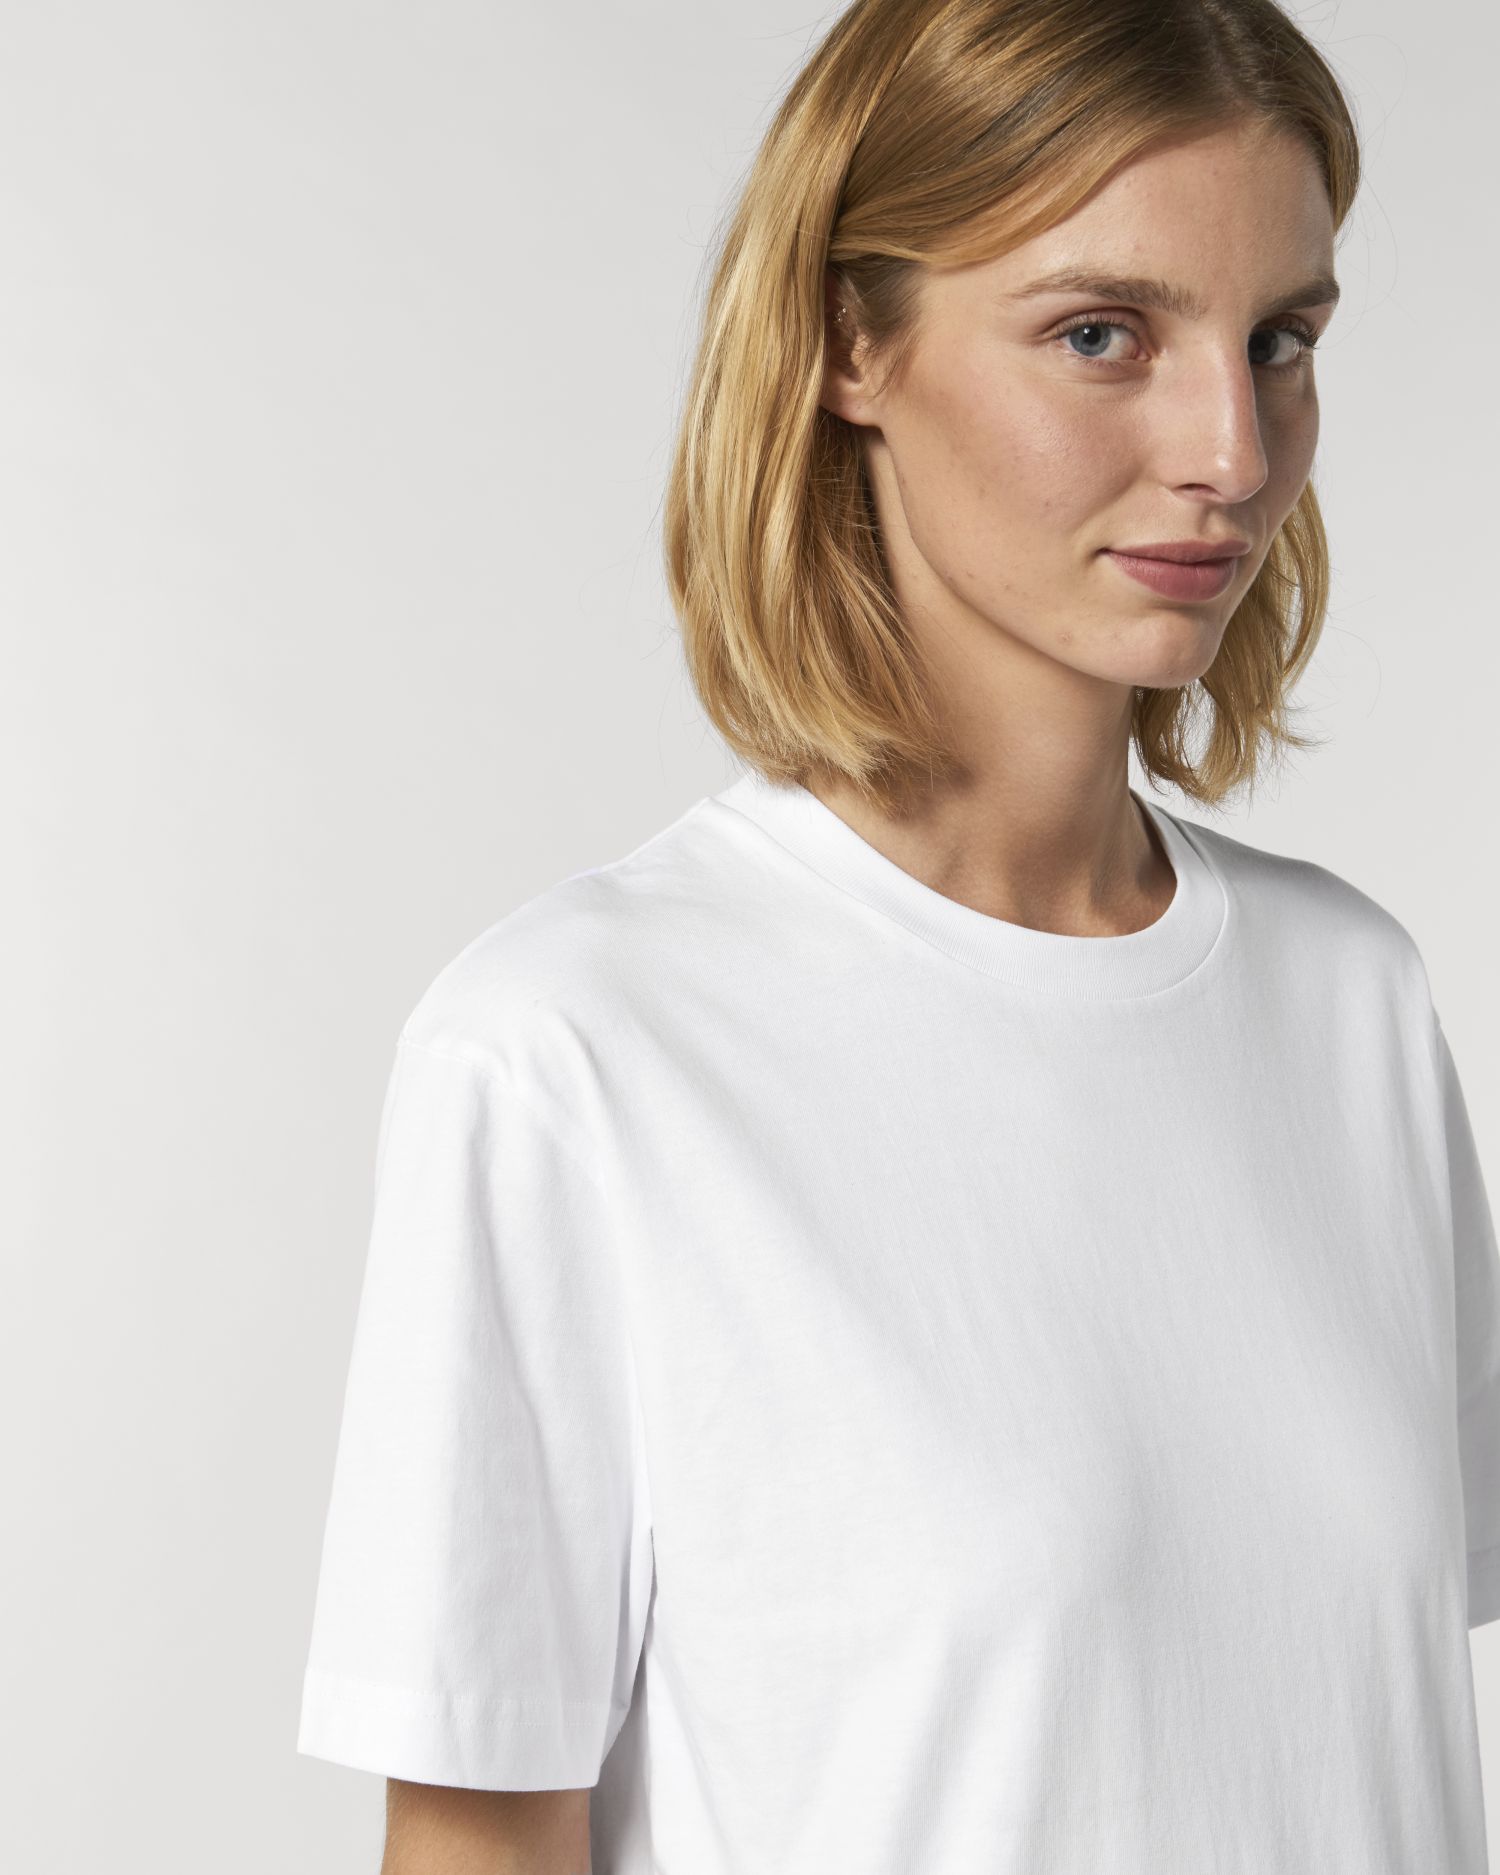 T-Shirt Fuser in Farbe White